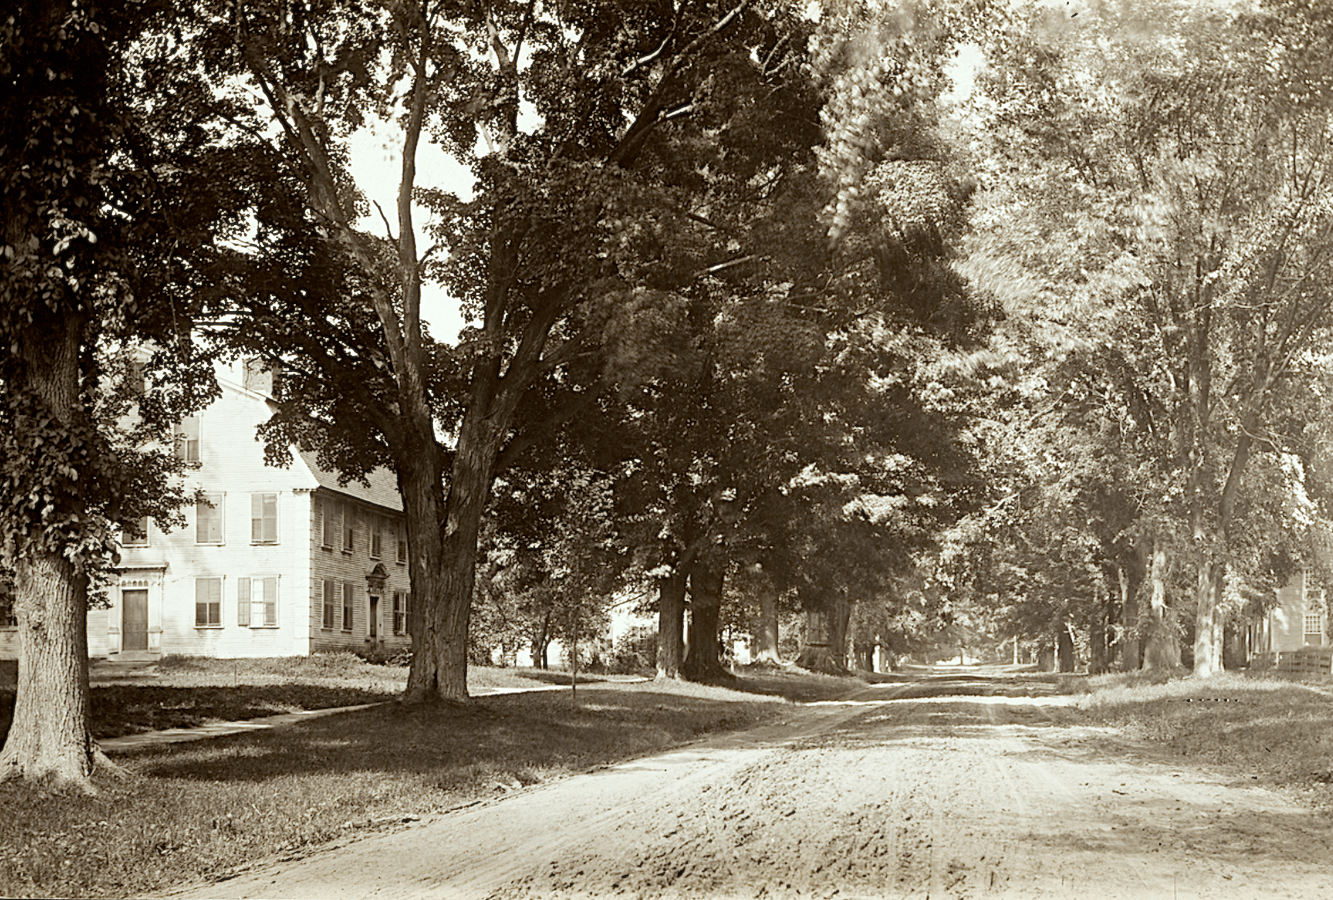 photo Joseph Stebbins Home taken 1888 - Old Main Street - historic Deerfield - photo public domain